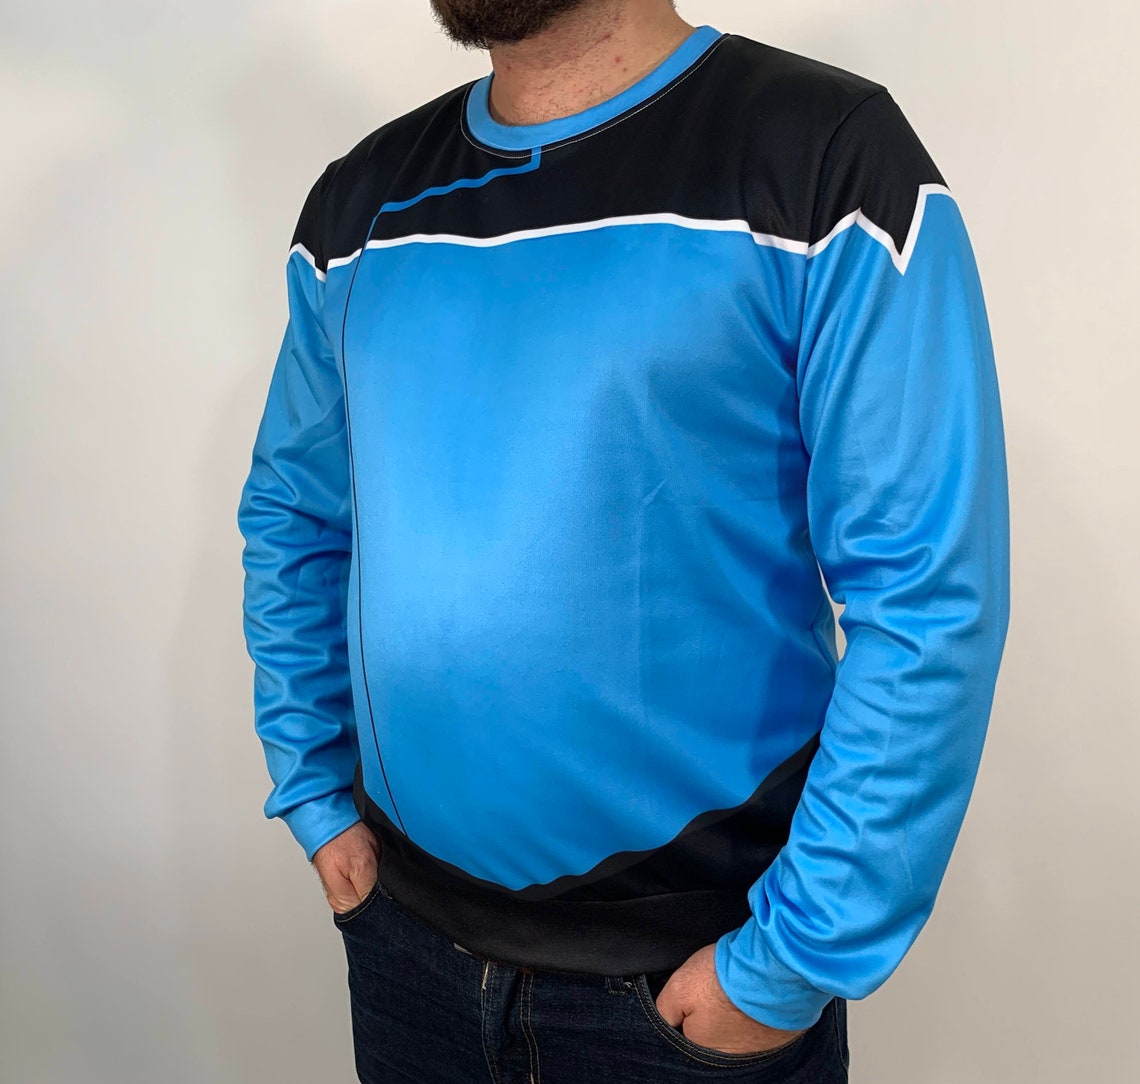 Lower Decks Blue Sweatshirt Uniform Tunic - STLD